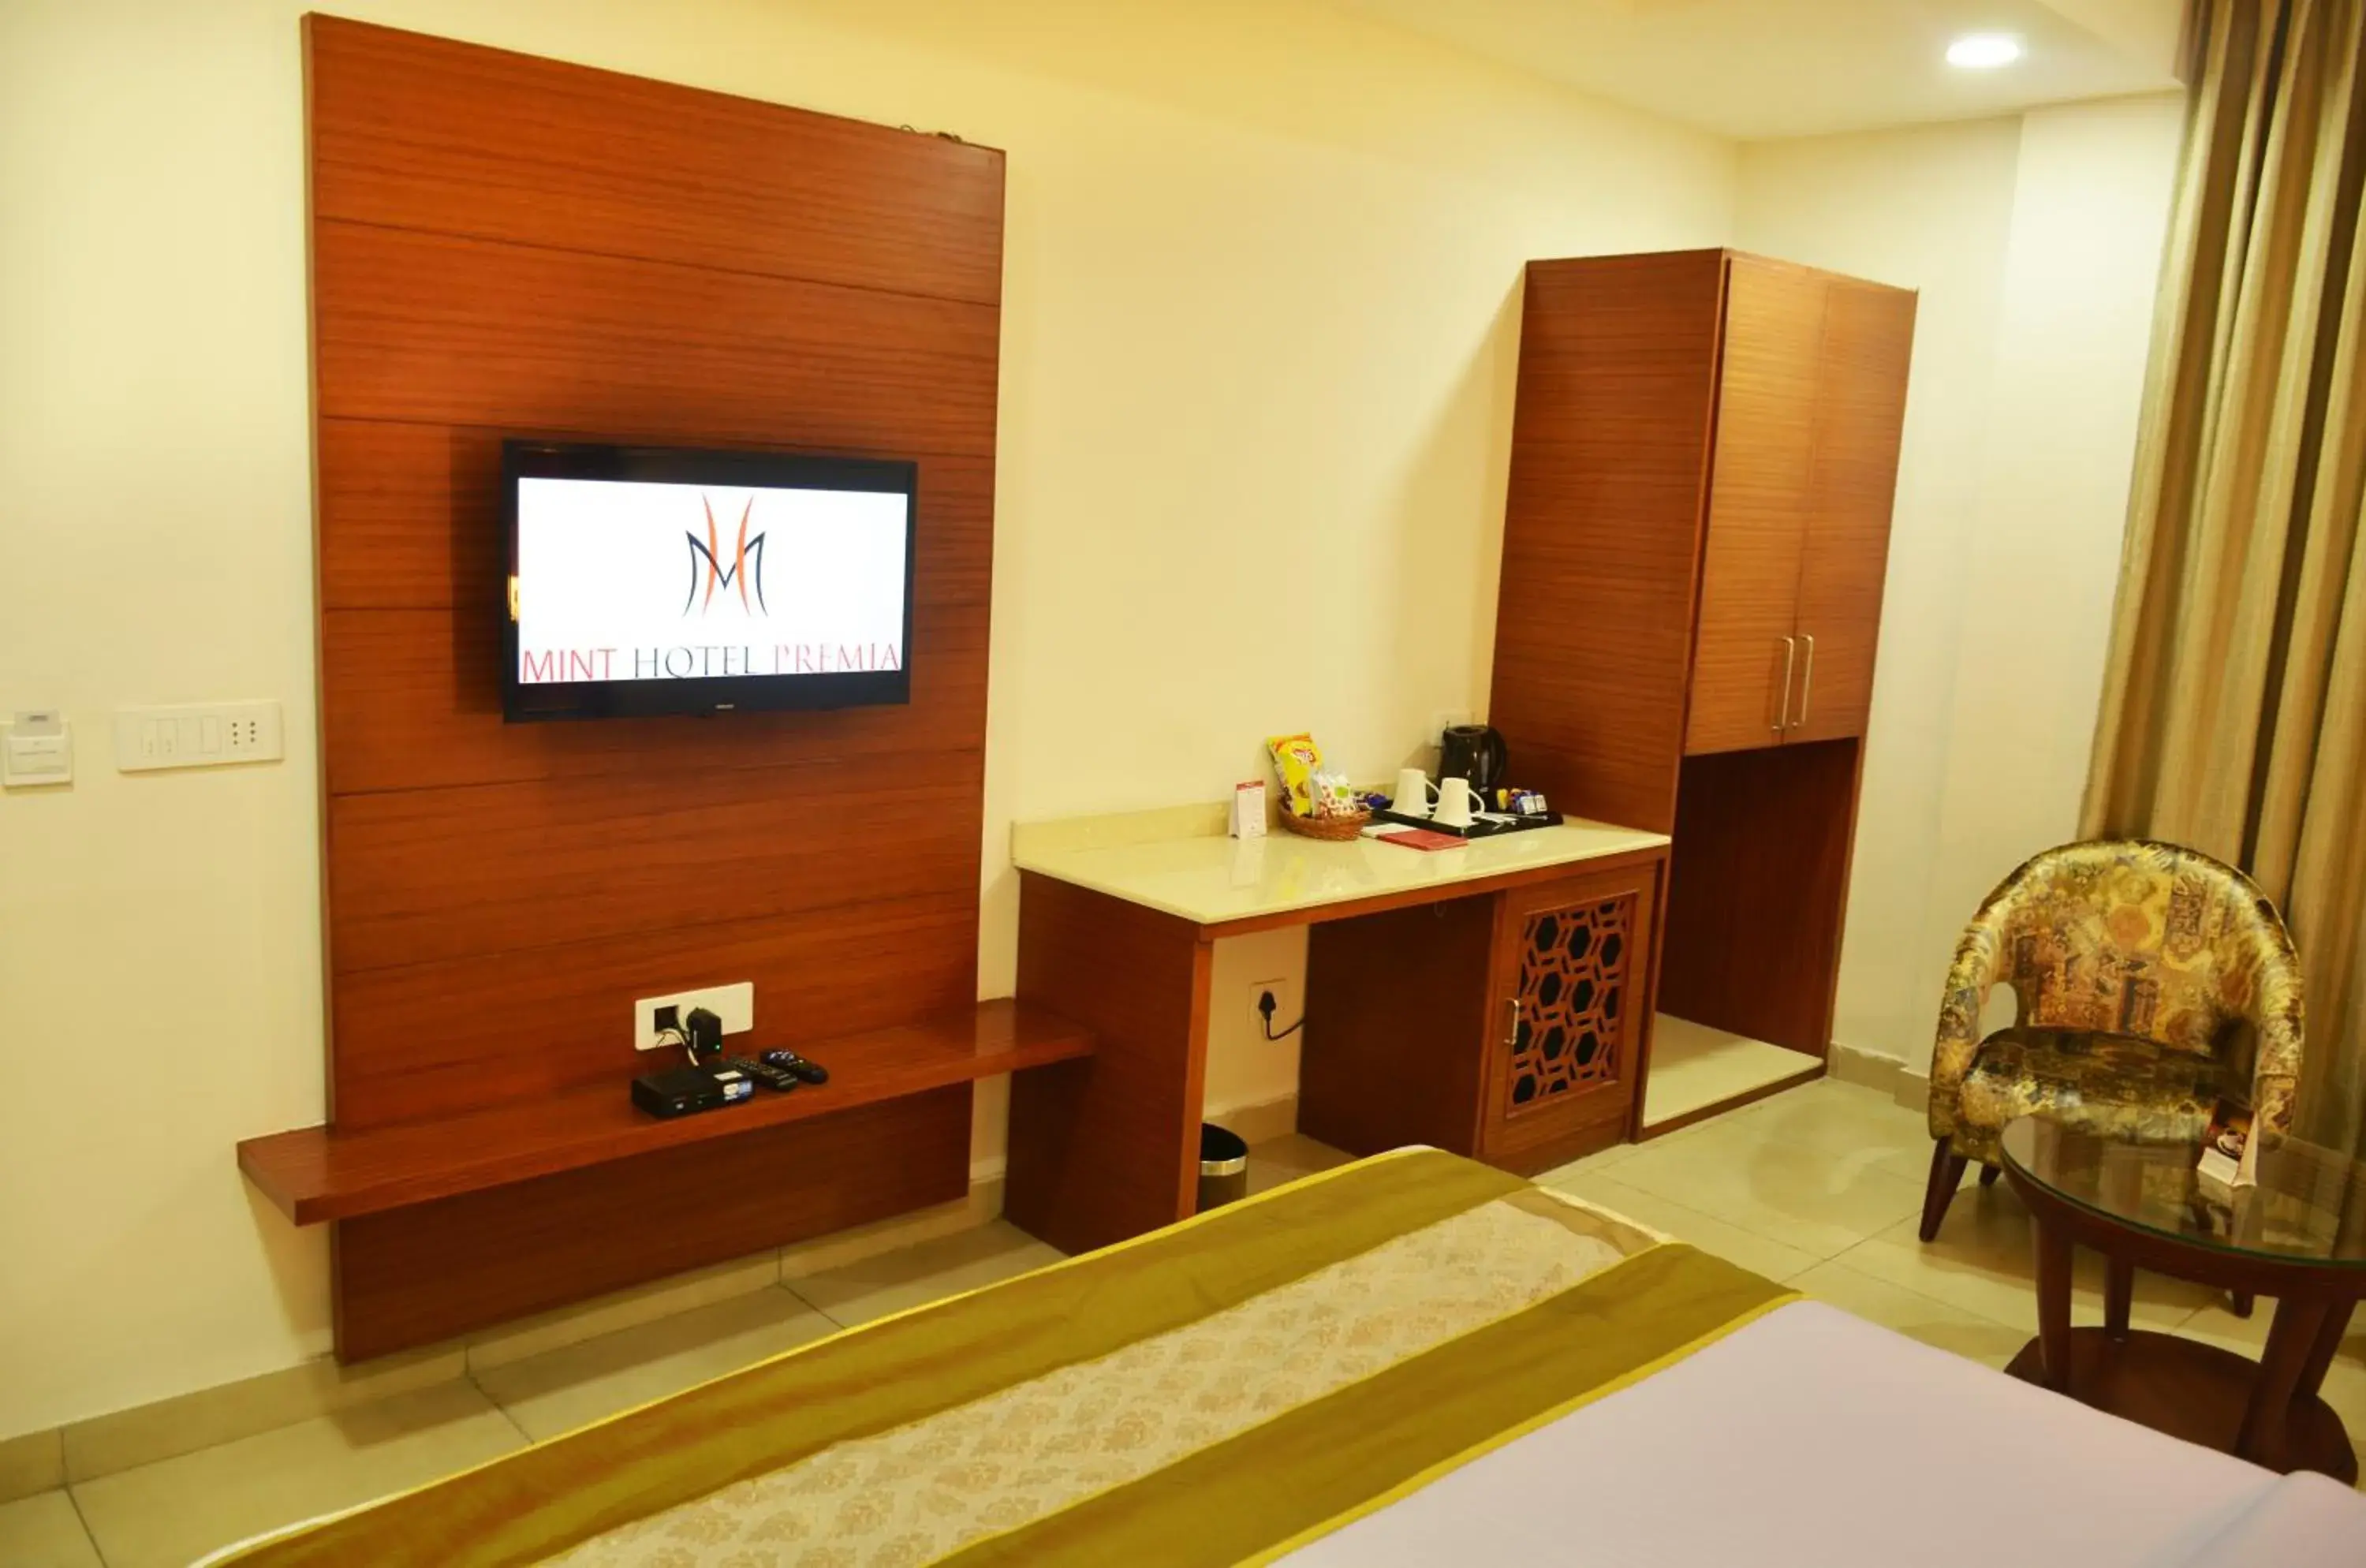 TV/Entertainment Center in Mint Hotel Premia Chandigarh, Zirakpur